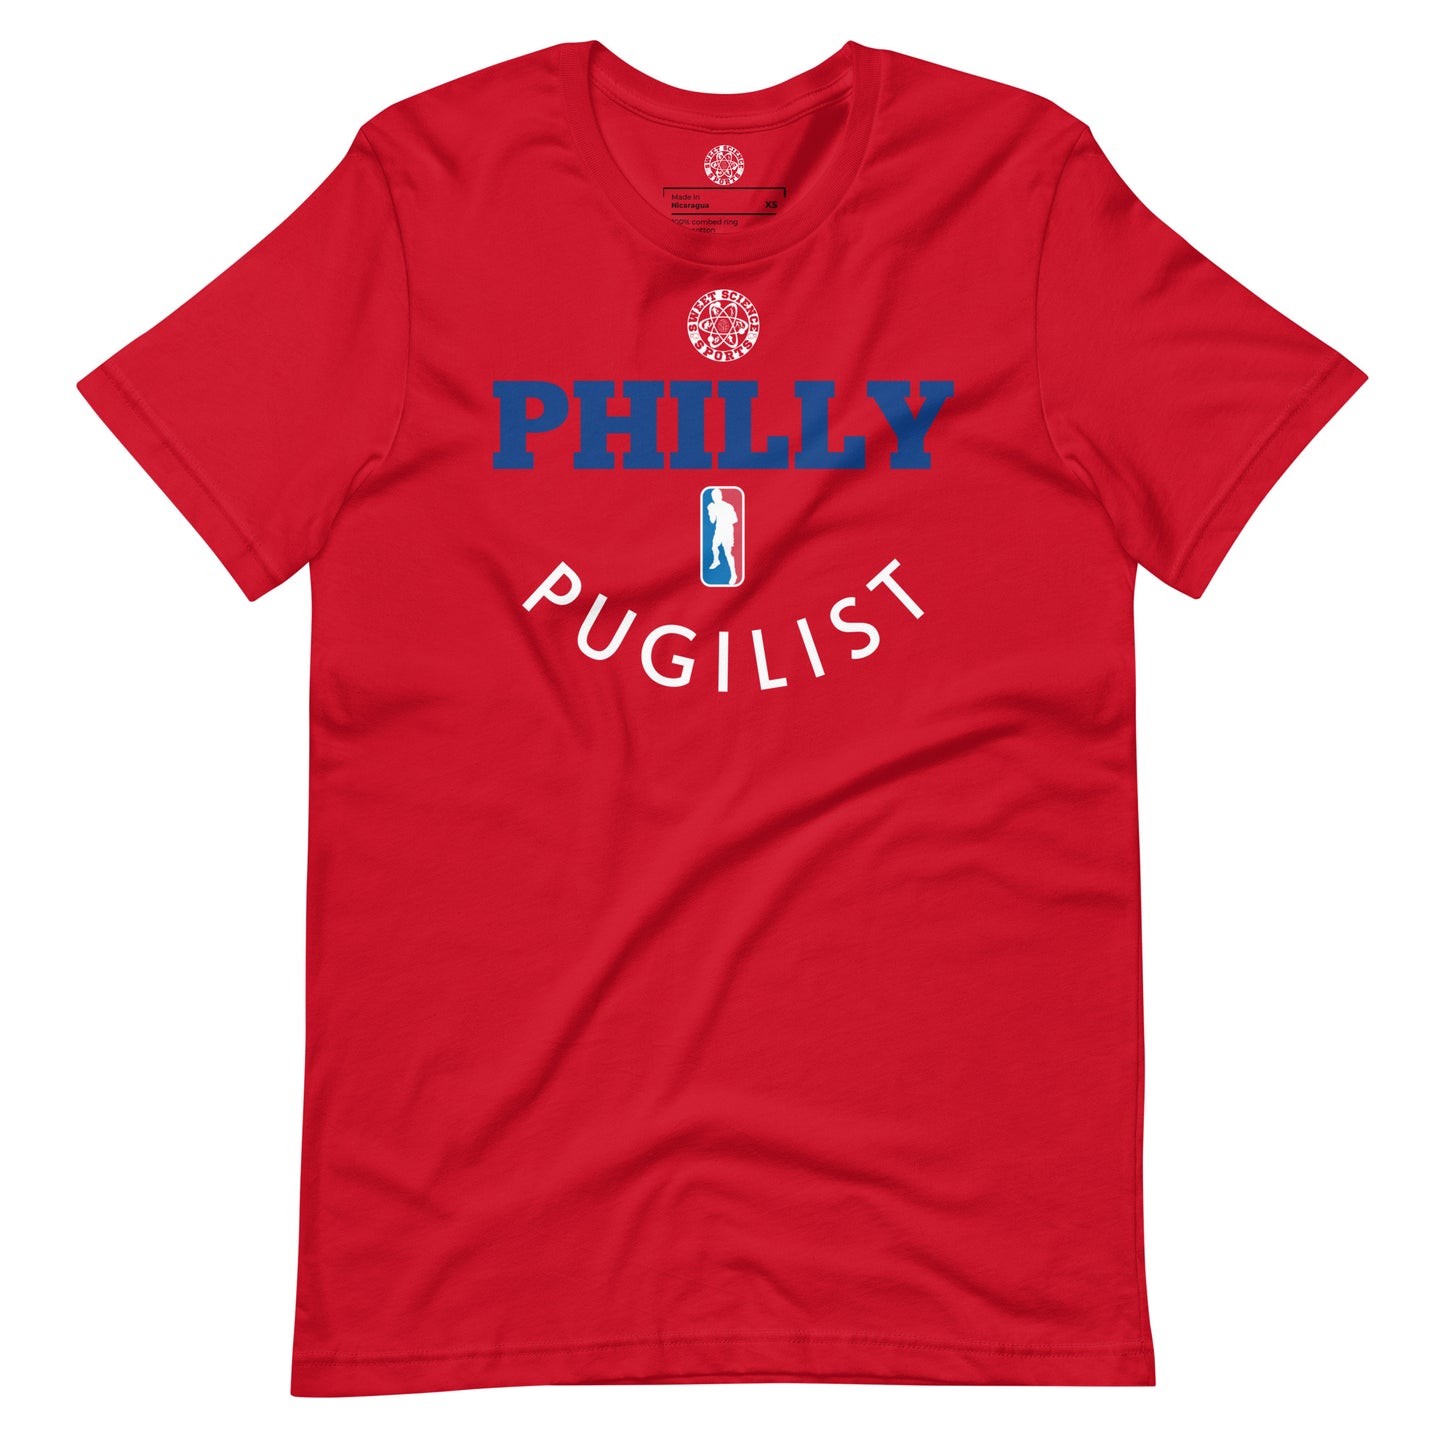 Philly Pugilist Unisex t-shirt